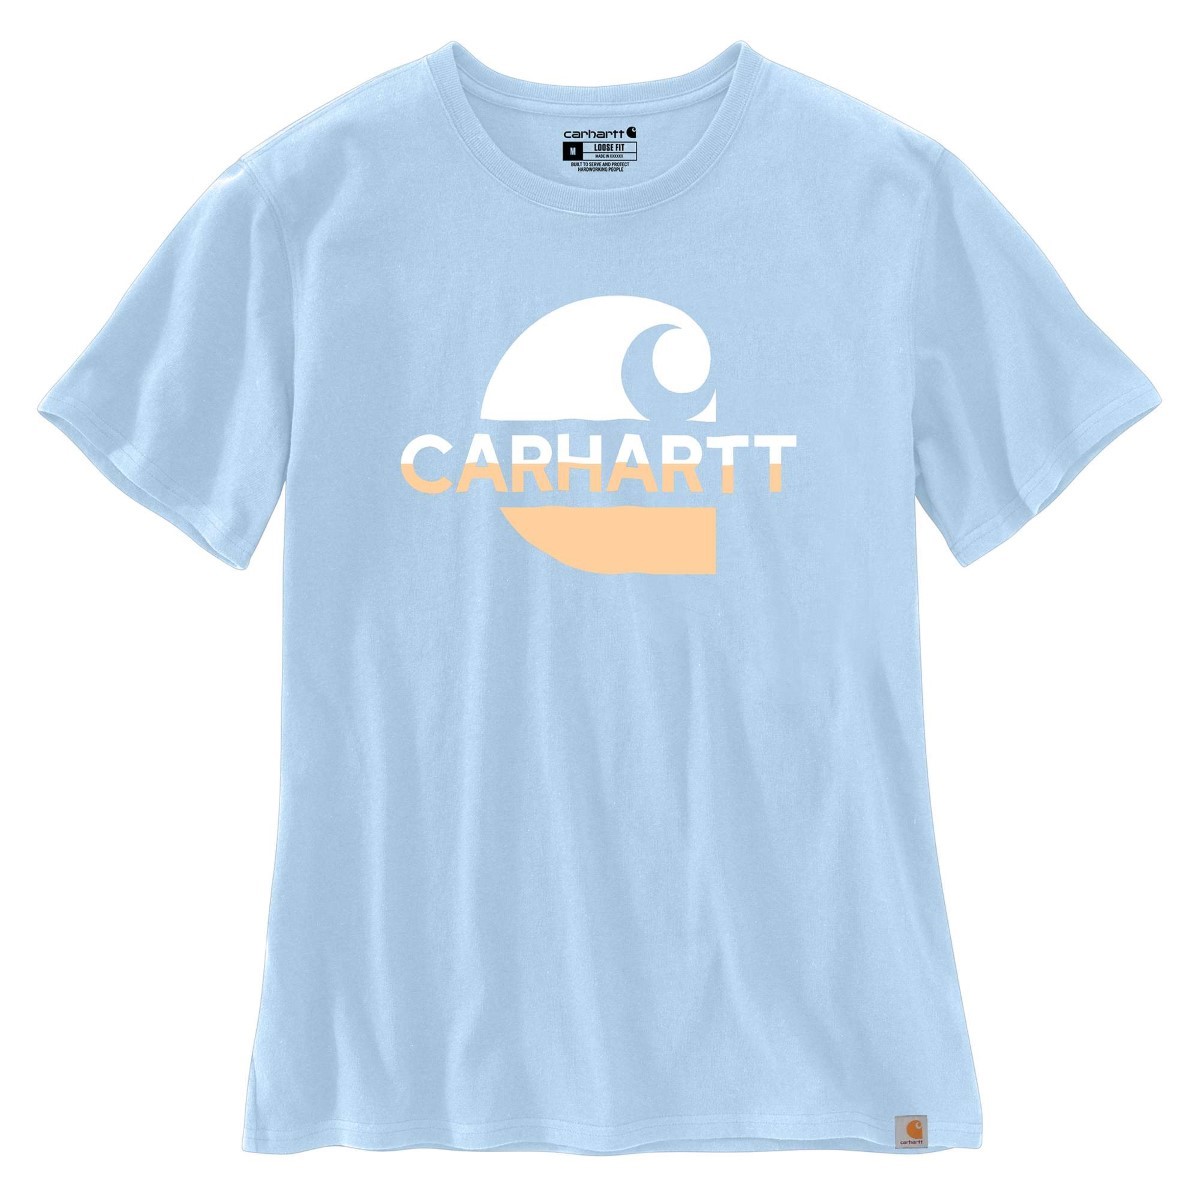 Carhartt Women's 105738 Loose Fit Heavyweight Short-Sleeve Faded C Graphic T-Shirt, Blue